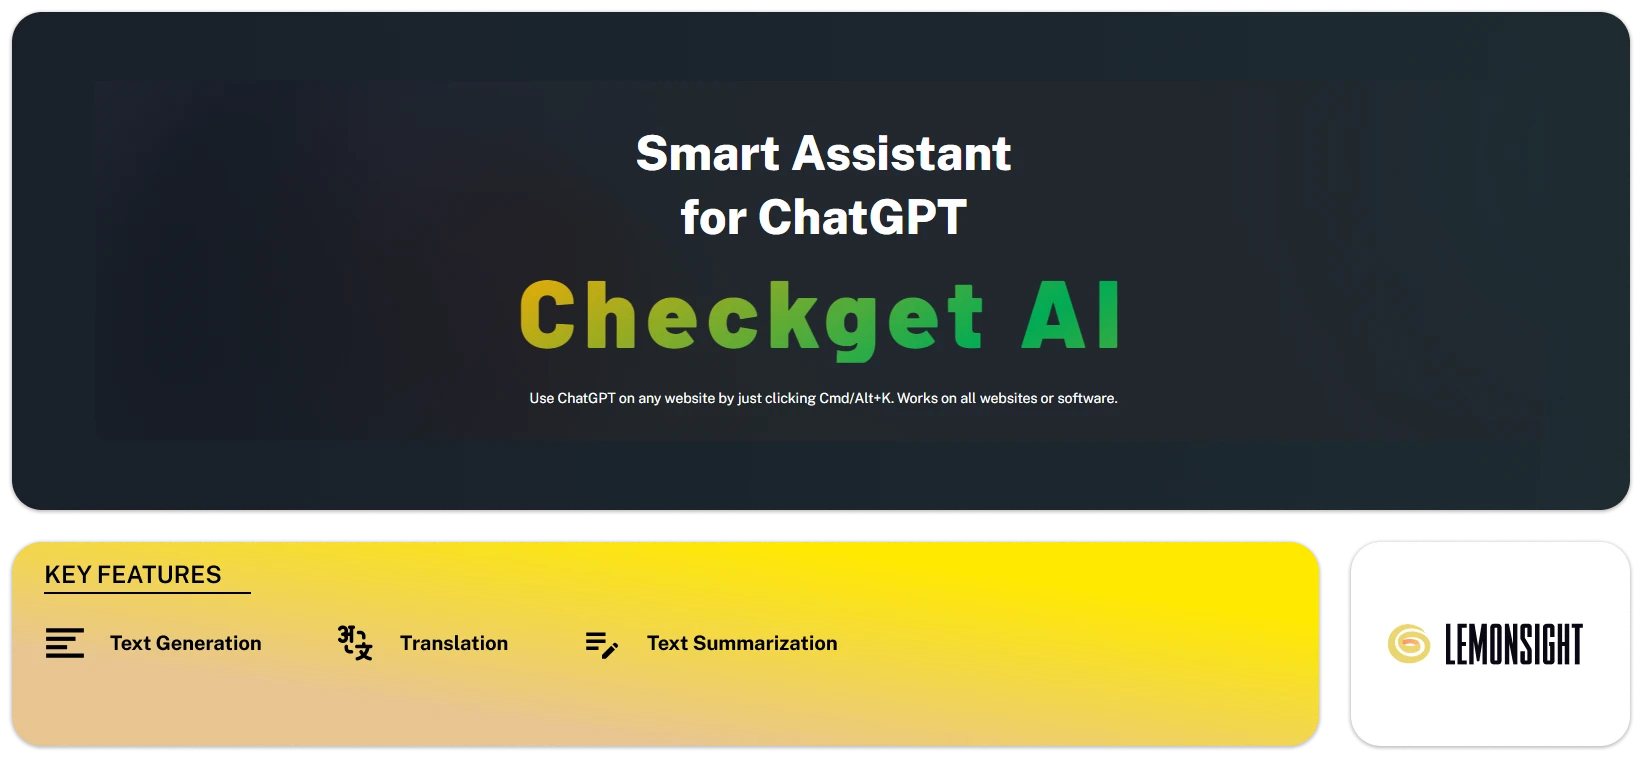 Checkget AI Feature Image